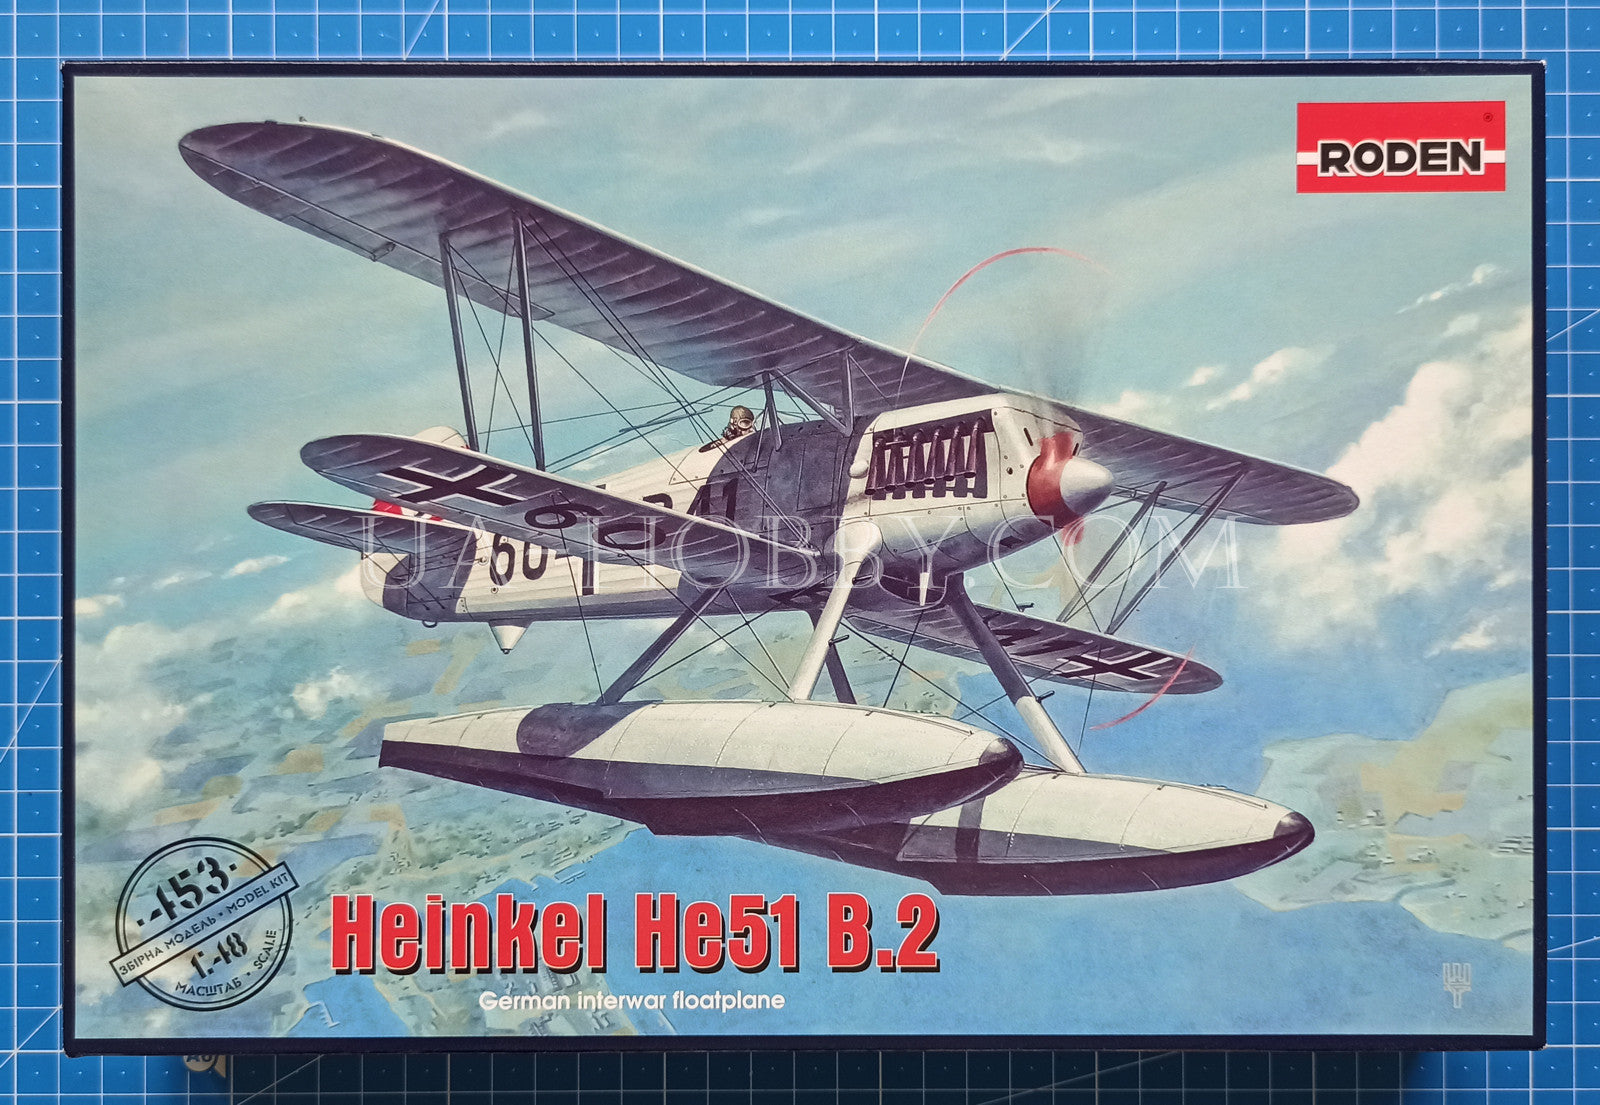 1/48 Heinkel He51 B.2 Float Plane. Roden 453